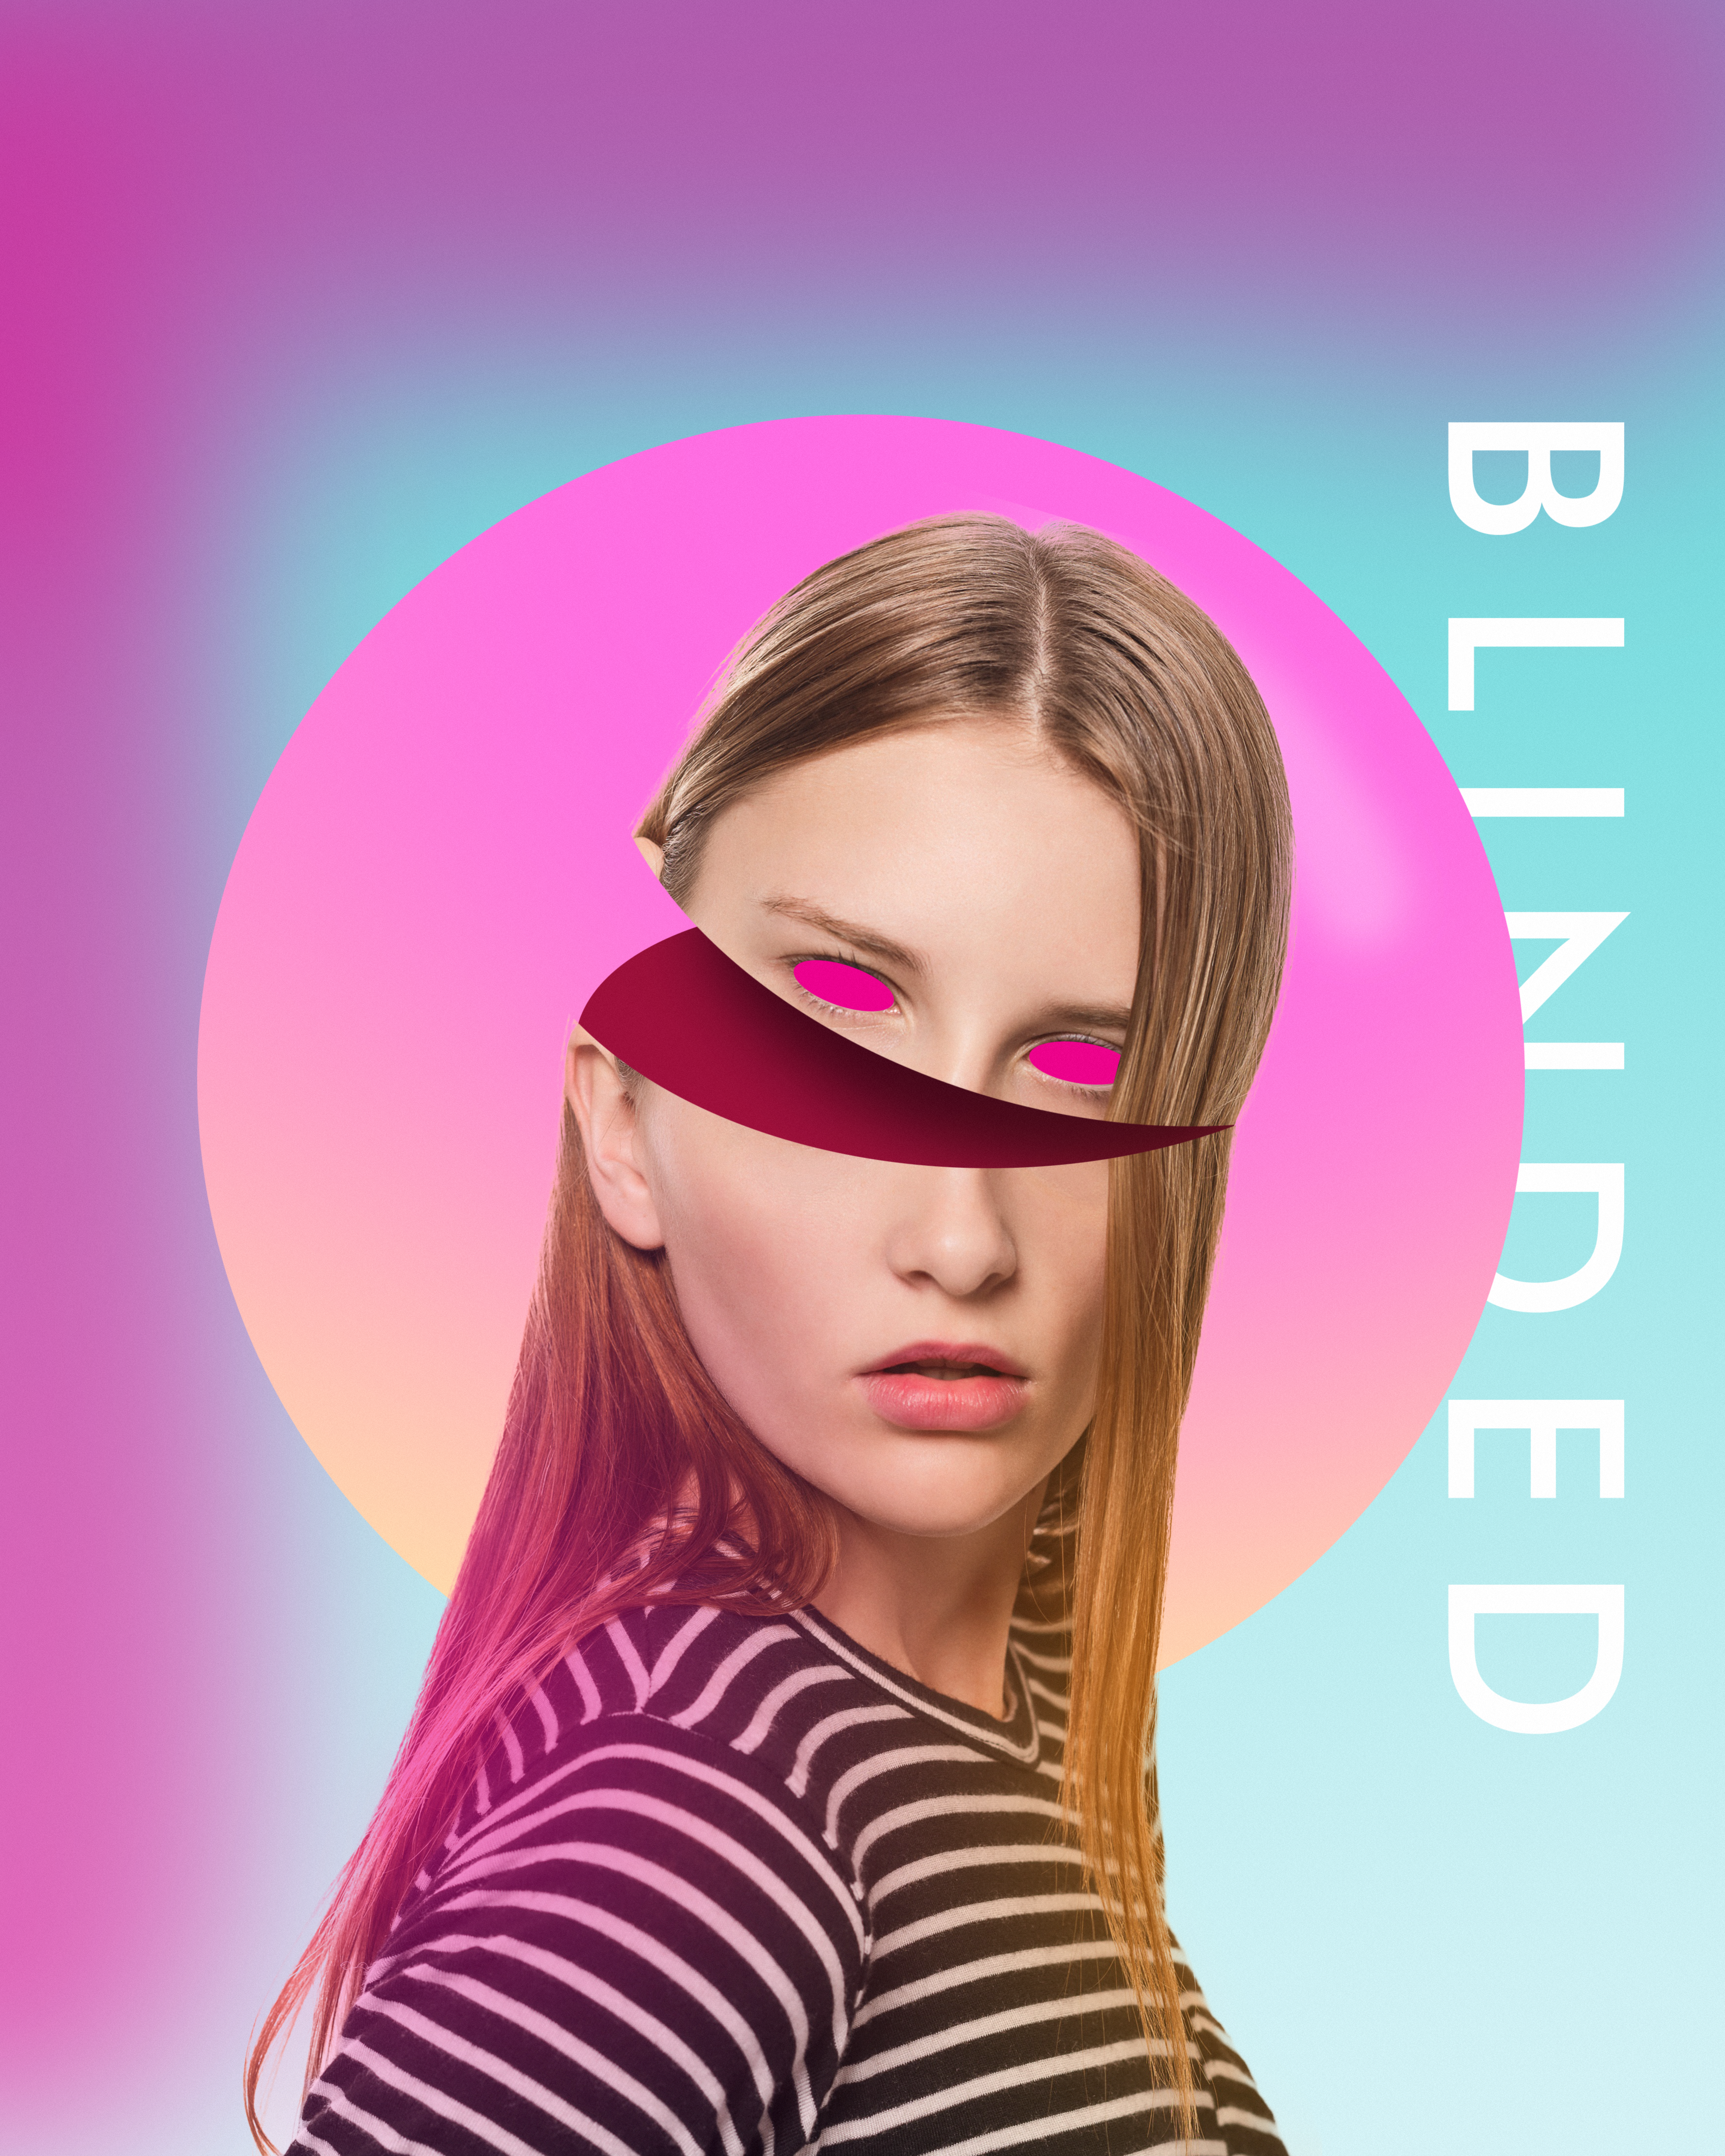 BLINDED